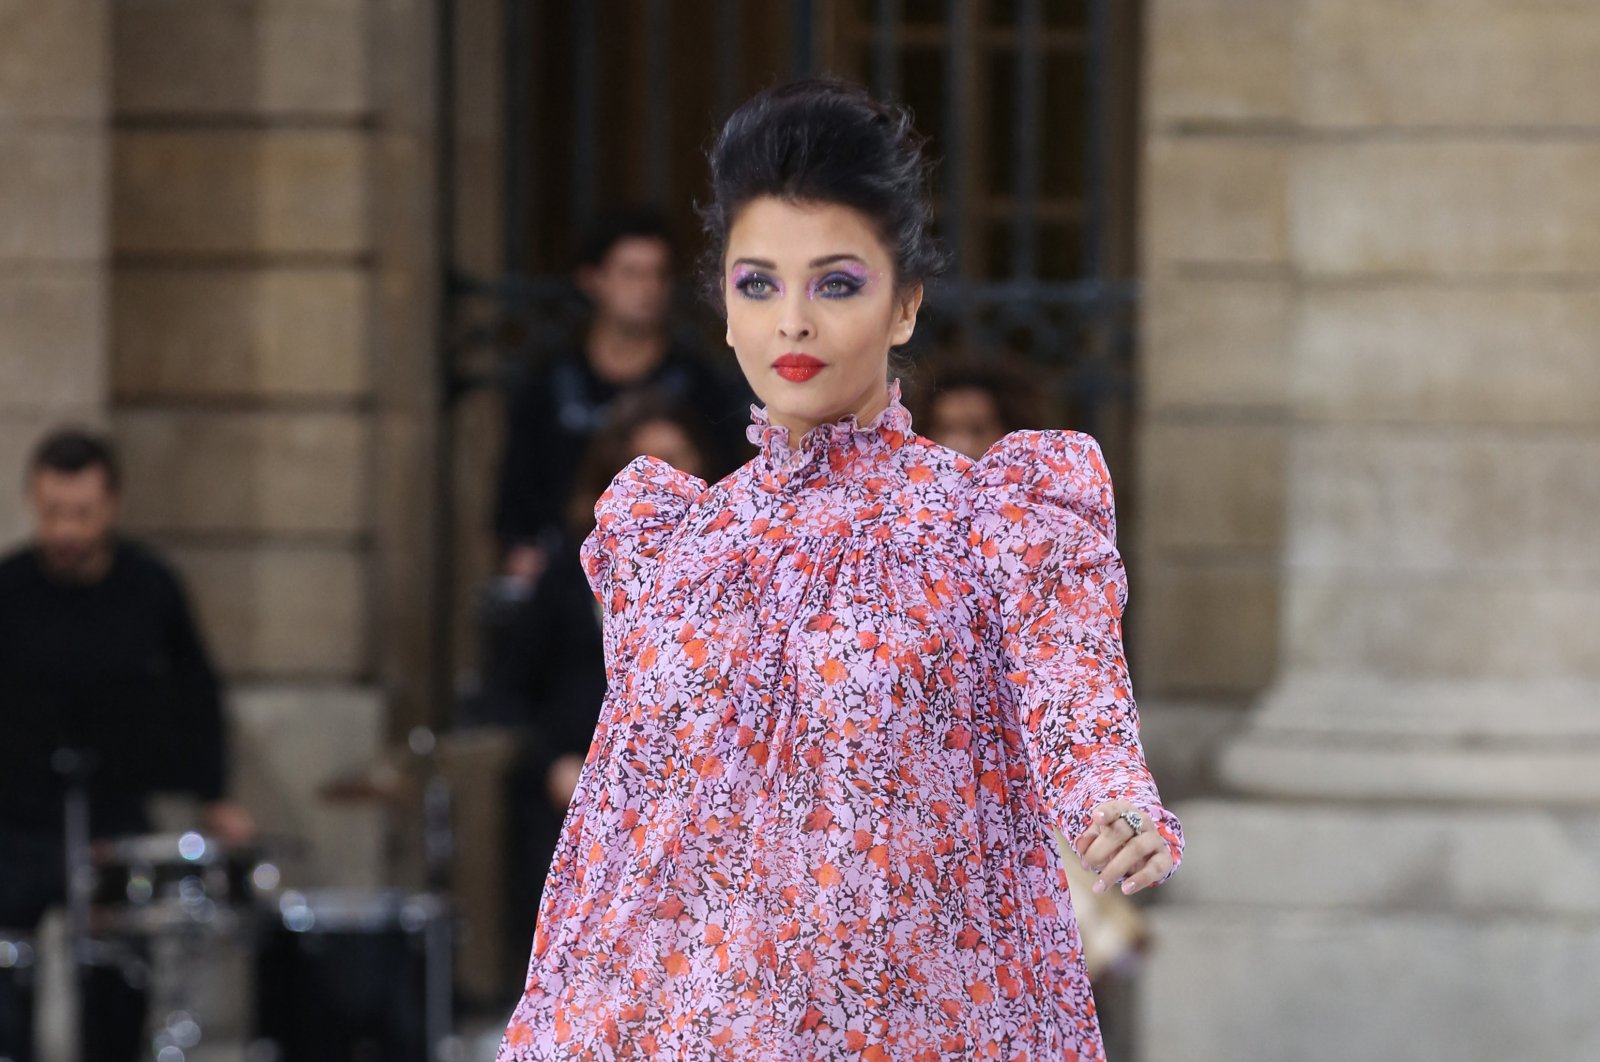 Aishwarya Rai walks the runway during the "Le Defile L'Oreal Paris" Show show as part of Paris Fashion Week in Paris, France on Sept. 28, 2019. (Reuters File Photo)